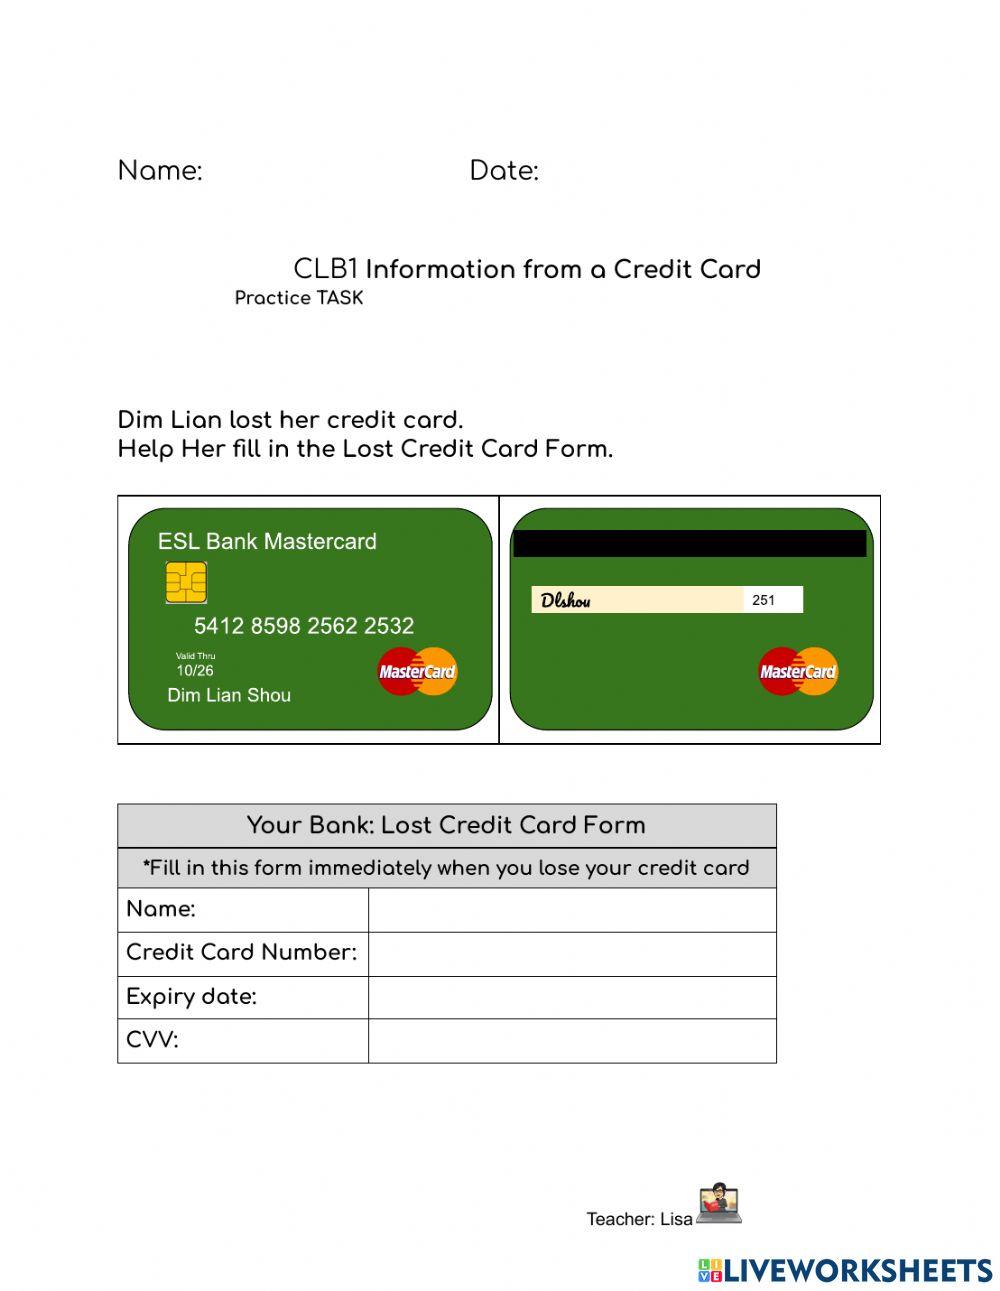 CLB 1: Credit Card Information